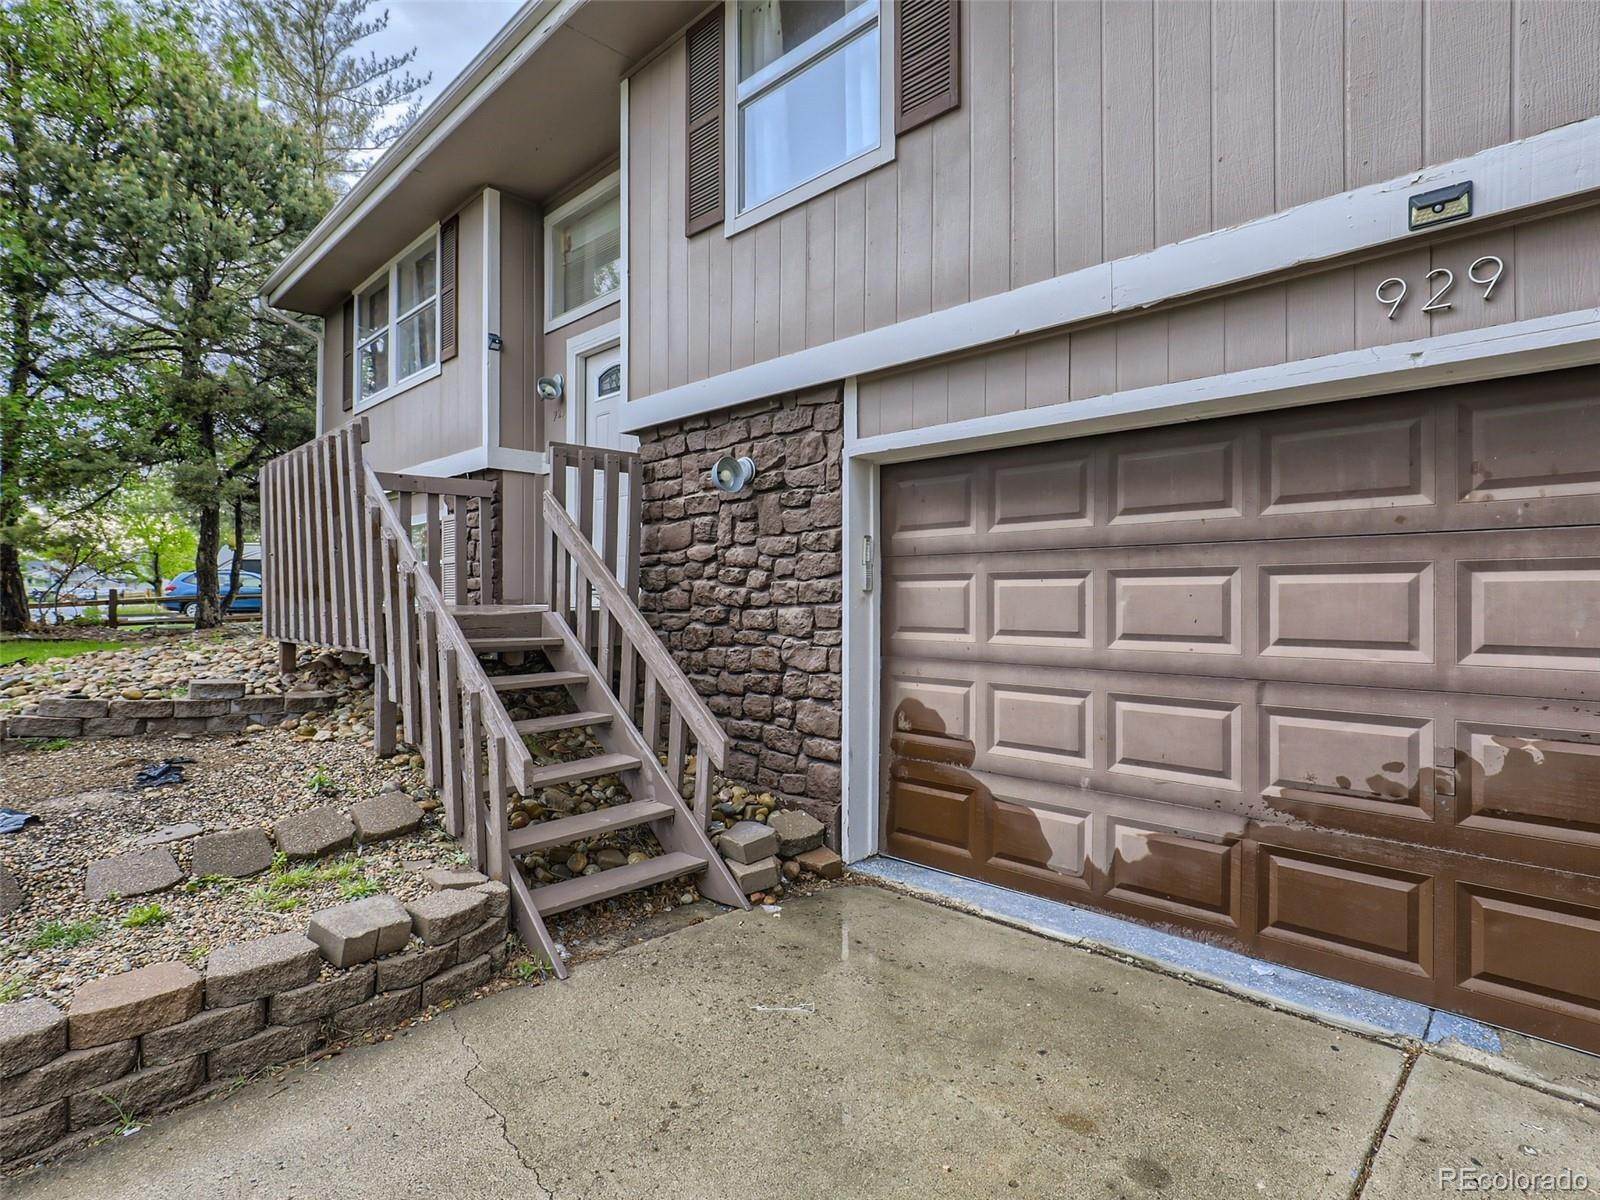 3. Single Family Homes for Sale at 929 S Salida Street Aurora, Colorado 80017 United States